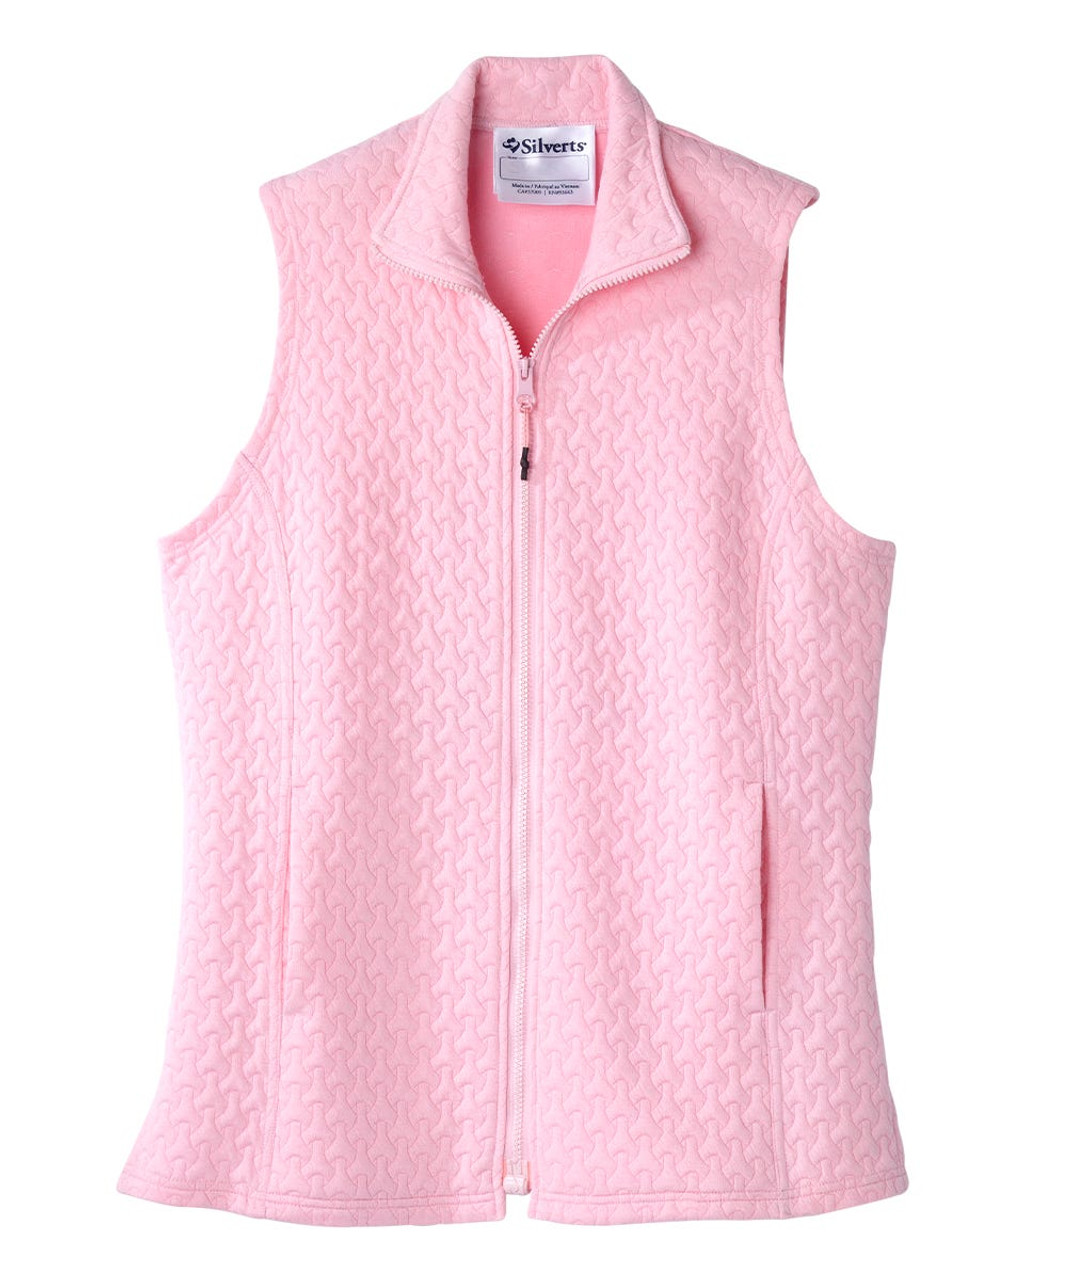 Silverts SV165 Senior Women's Adaptive Mag Zip Track Suit Vest Pink, Size=2XL, SV165-SV14-2XL